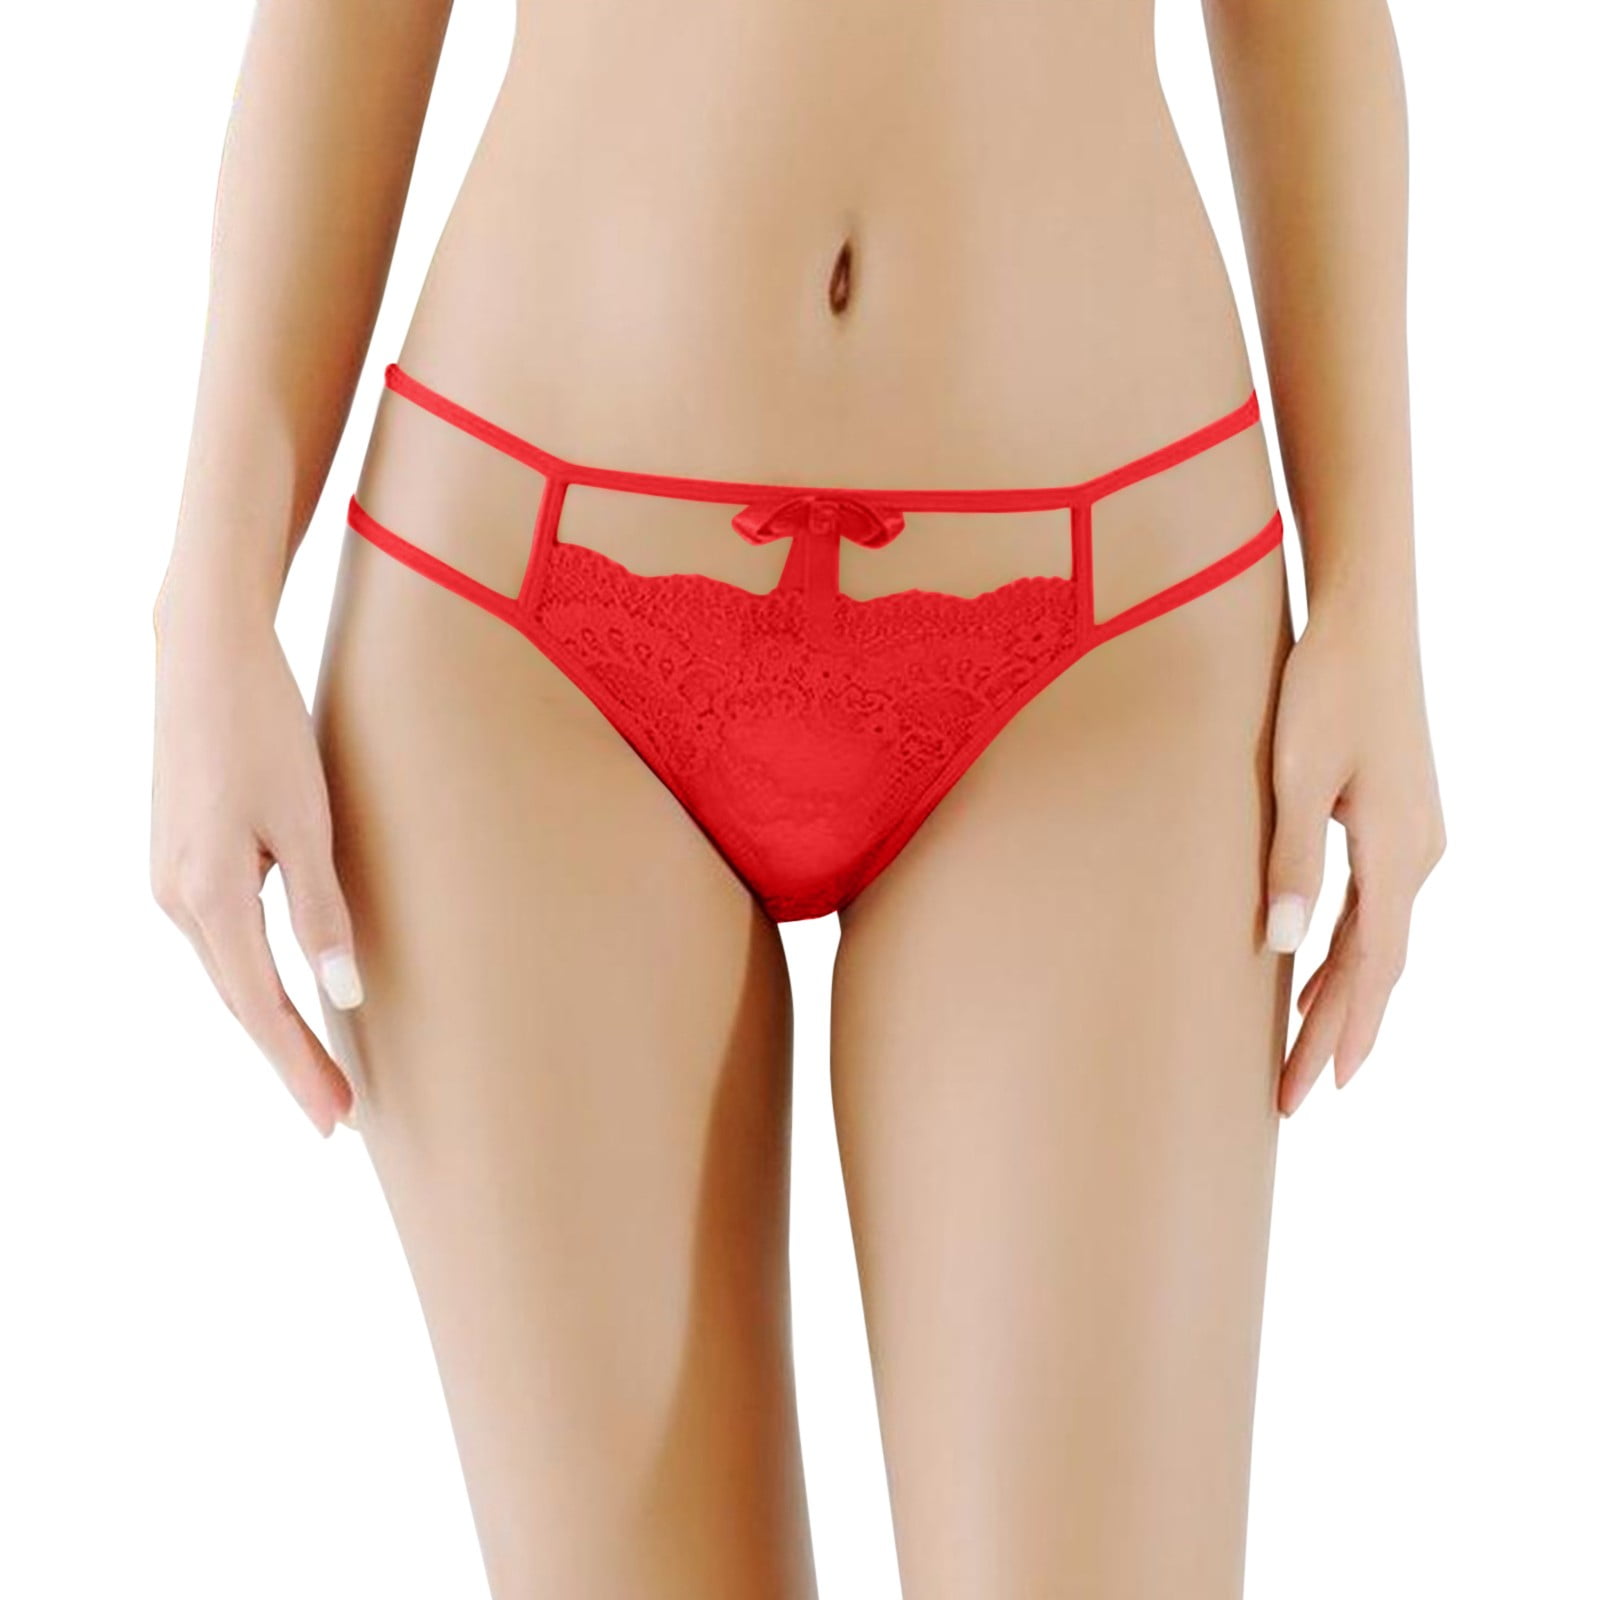 Rovga Underwear For Women New Hot For Female Letter & Floral Print Low  Waist Skinny Short Panties Ladies Lingeries 